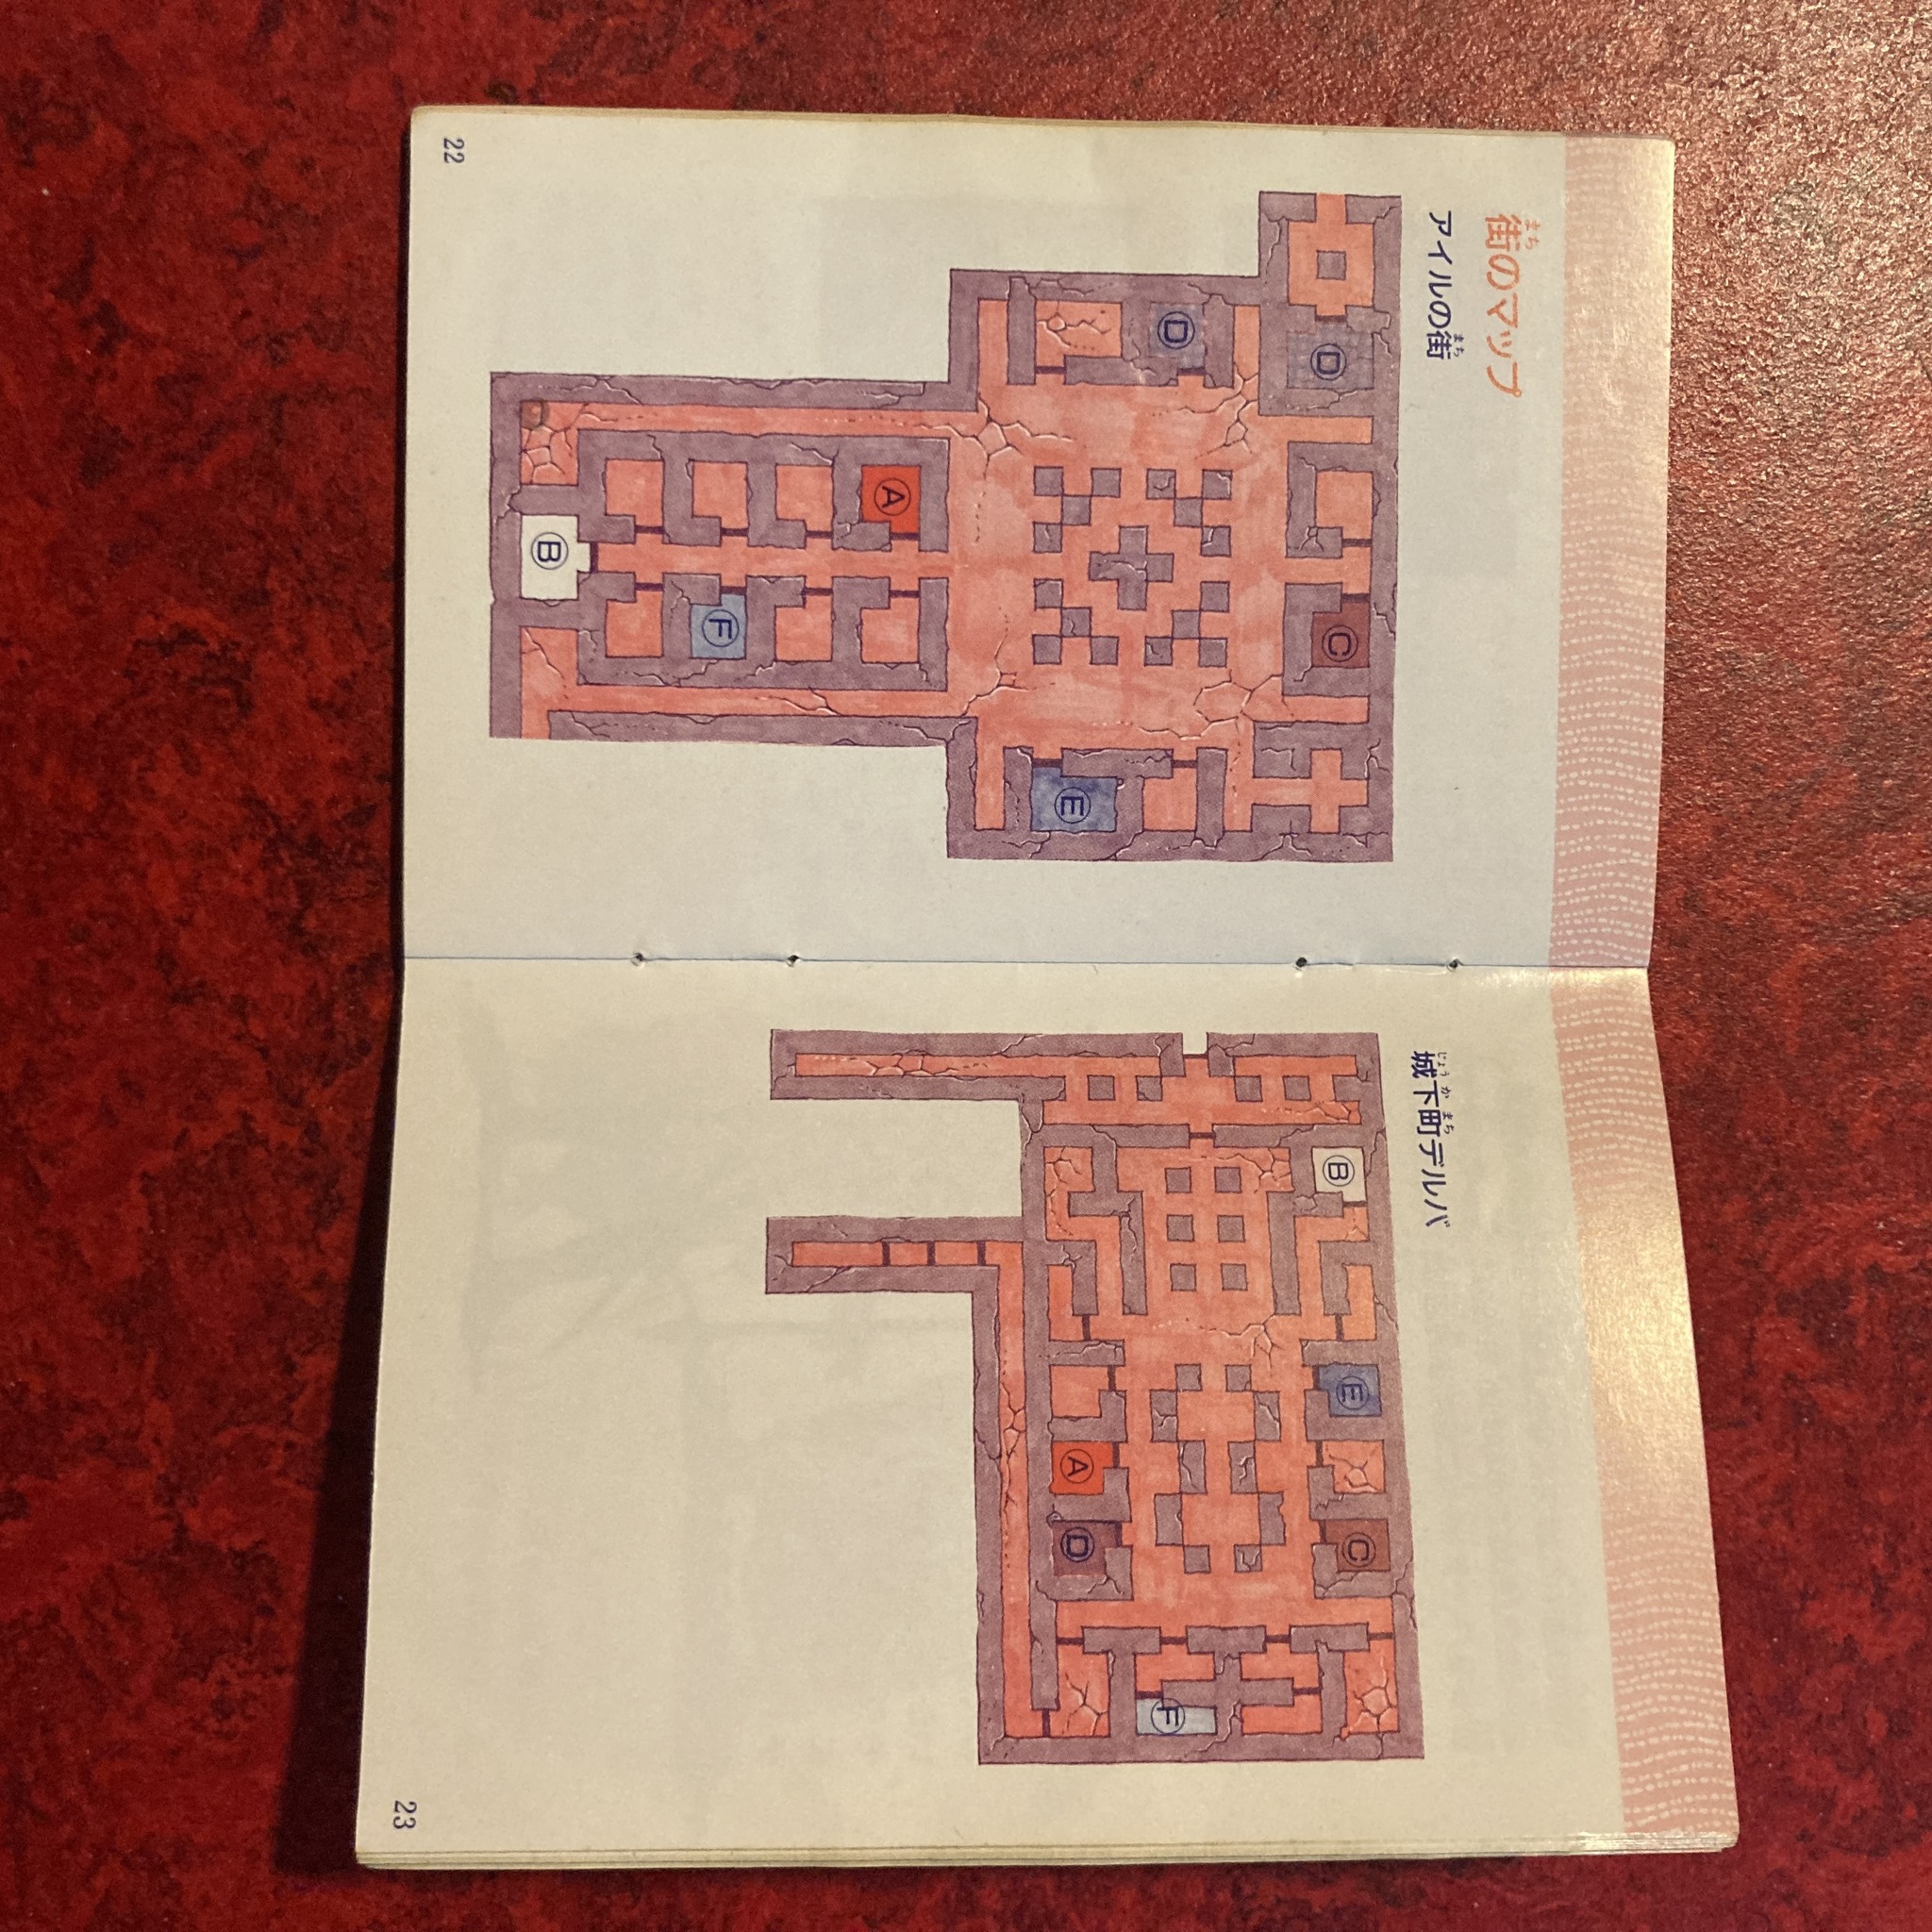 Deep Dungeon III: Yūshi heno Tabi (Famicom)